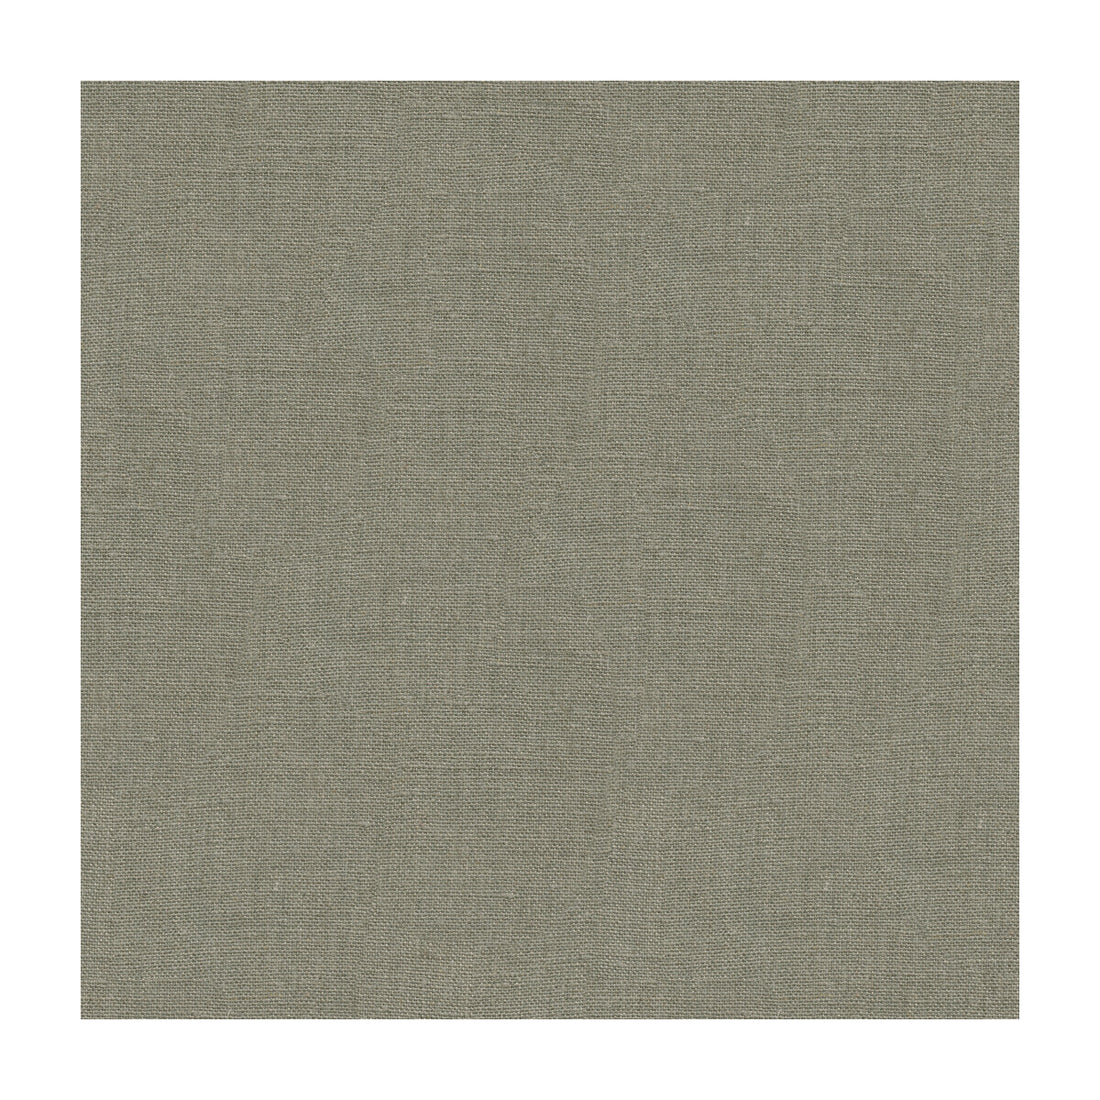 Dublin fabric in oatmeal color - pattern 32344.21.0 - by Kravet Basics